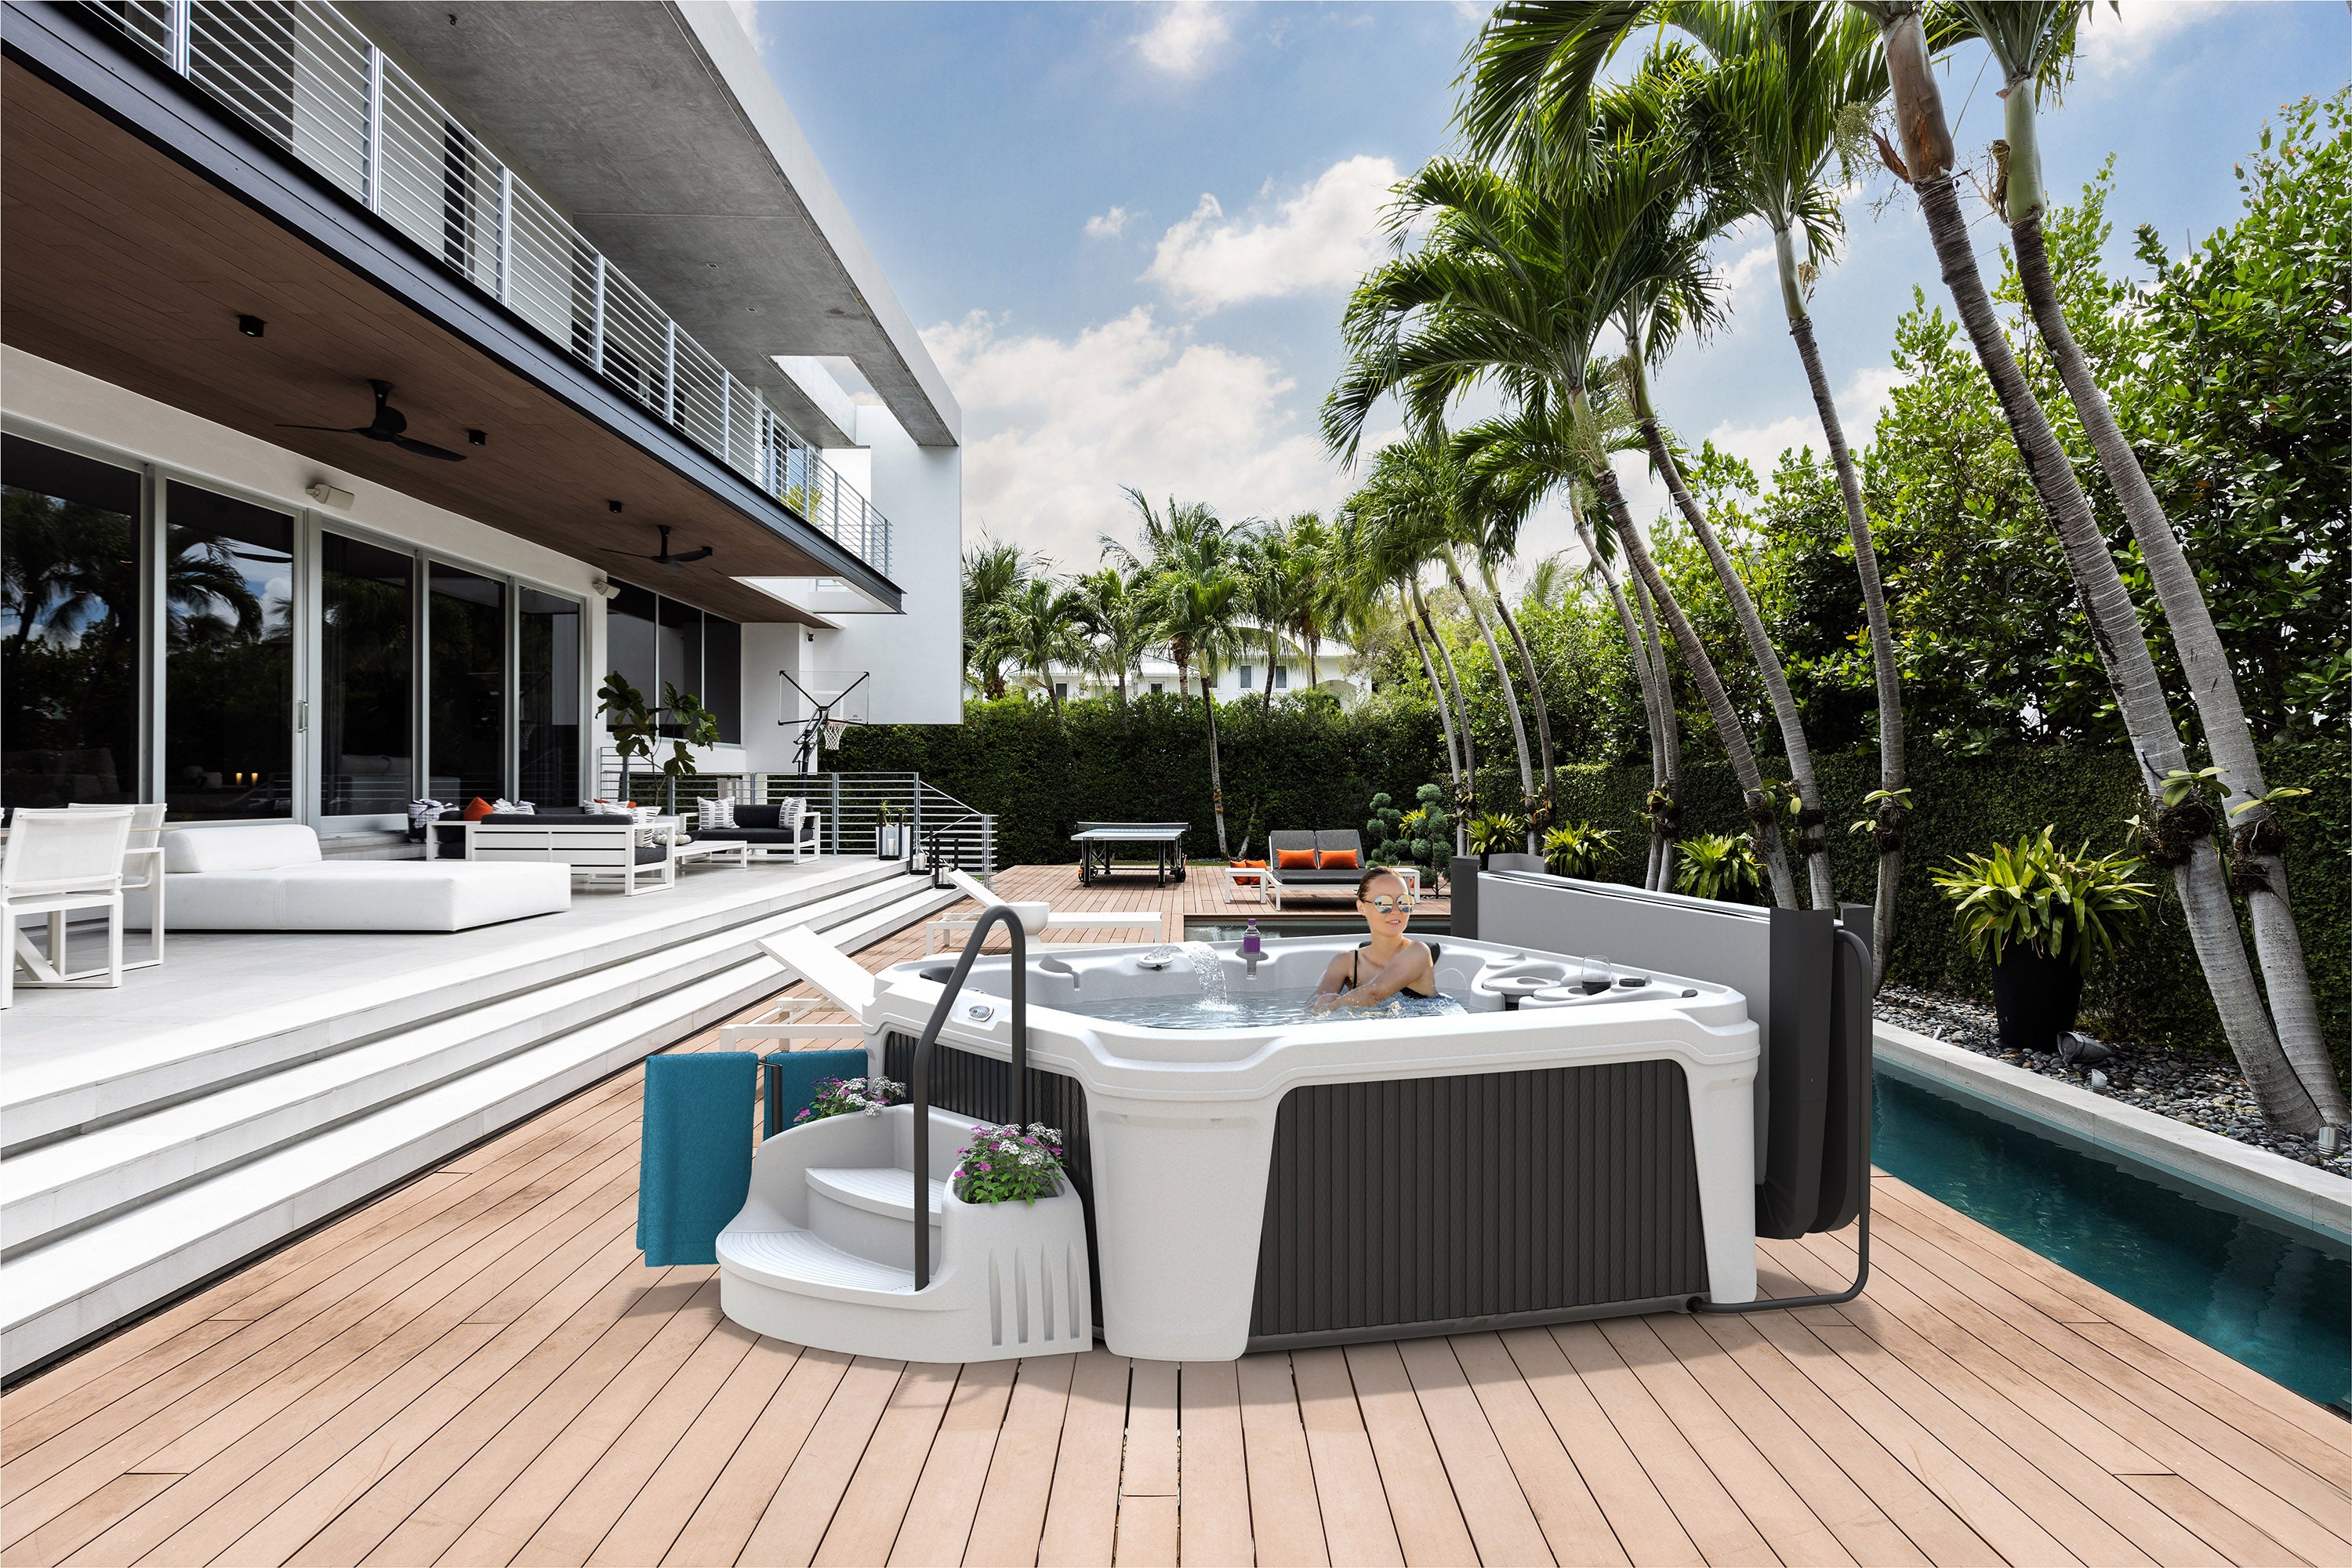 An AquaRest Spas Daydream 3500S Hot Tub sits on a deck in a backyard